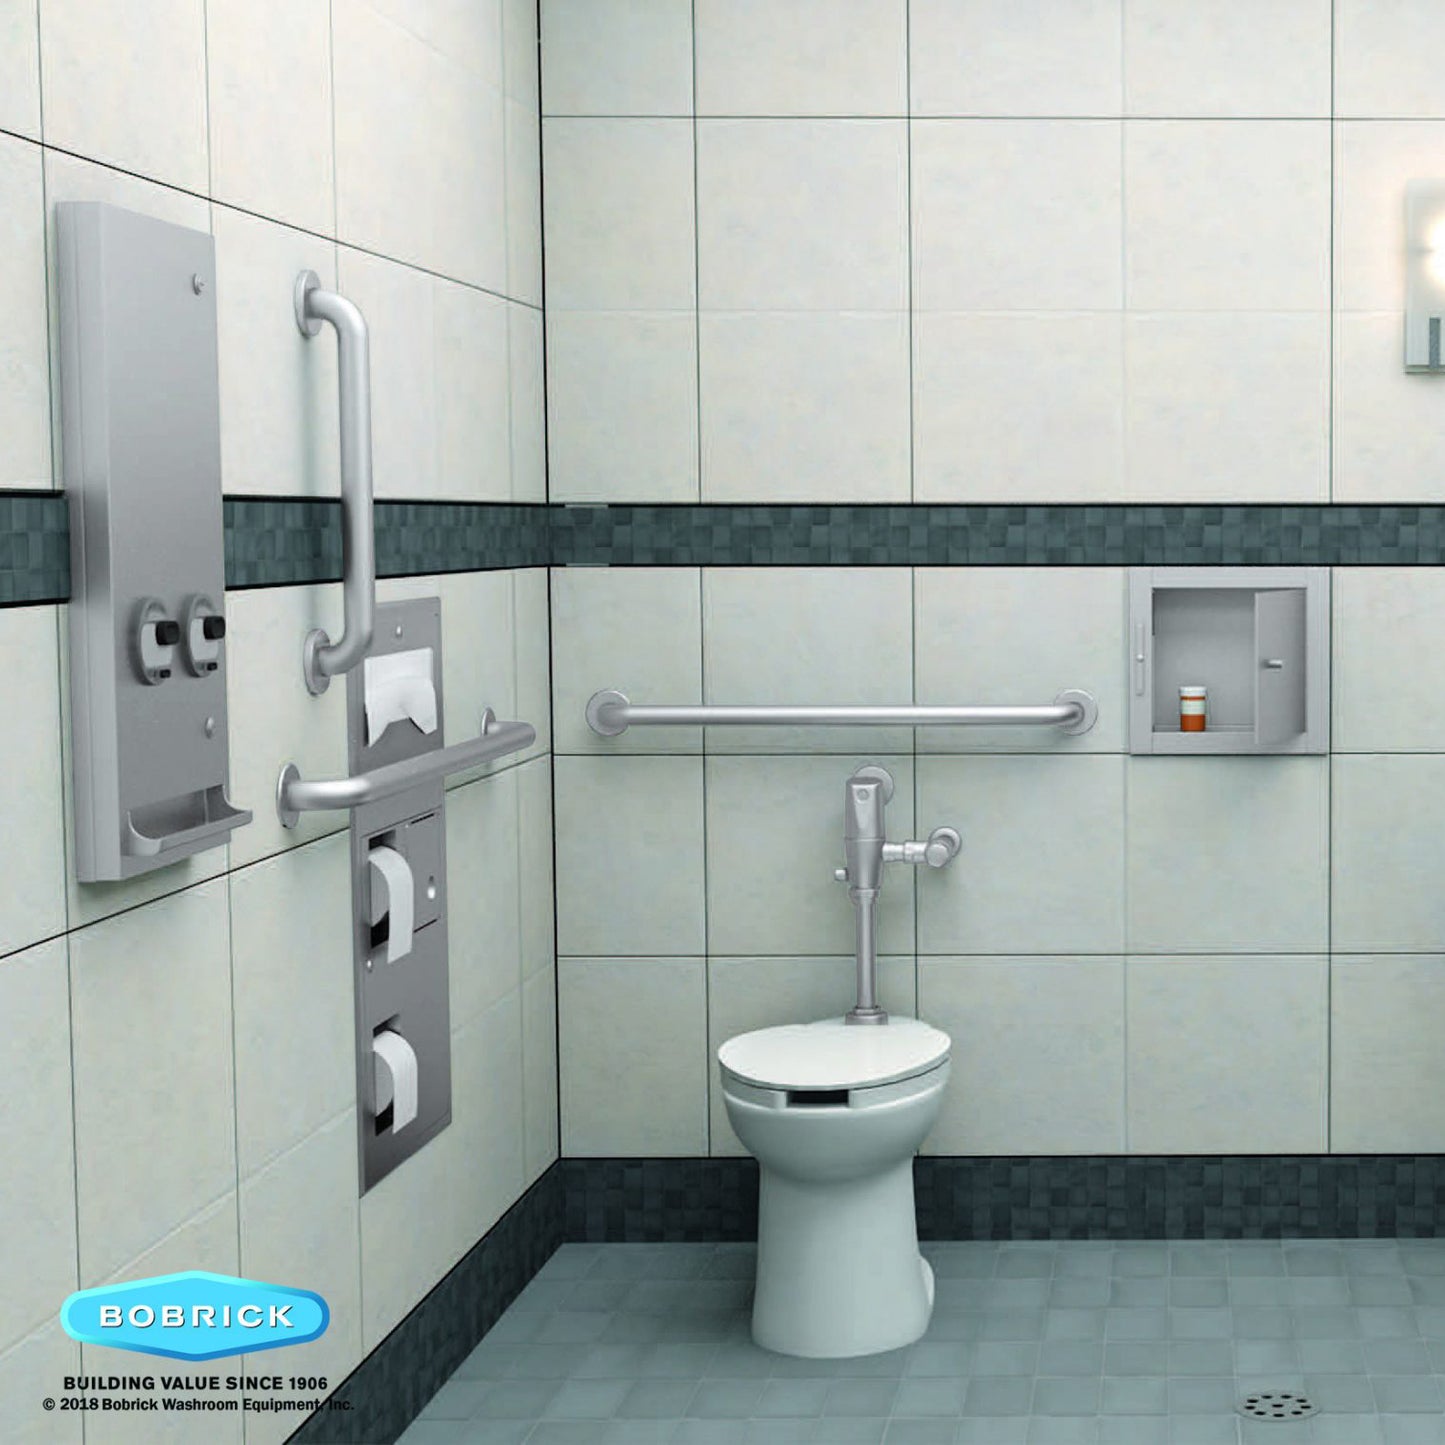 Bobrick 35745 - Recessed Seat-Cover Dispenser, Sanitary Napkin Disposal and Toilet Tissue Dispenser in Satin Stainless Steel